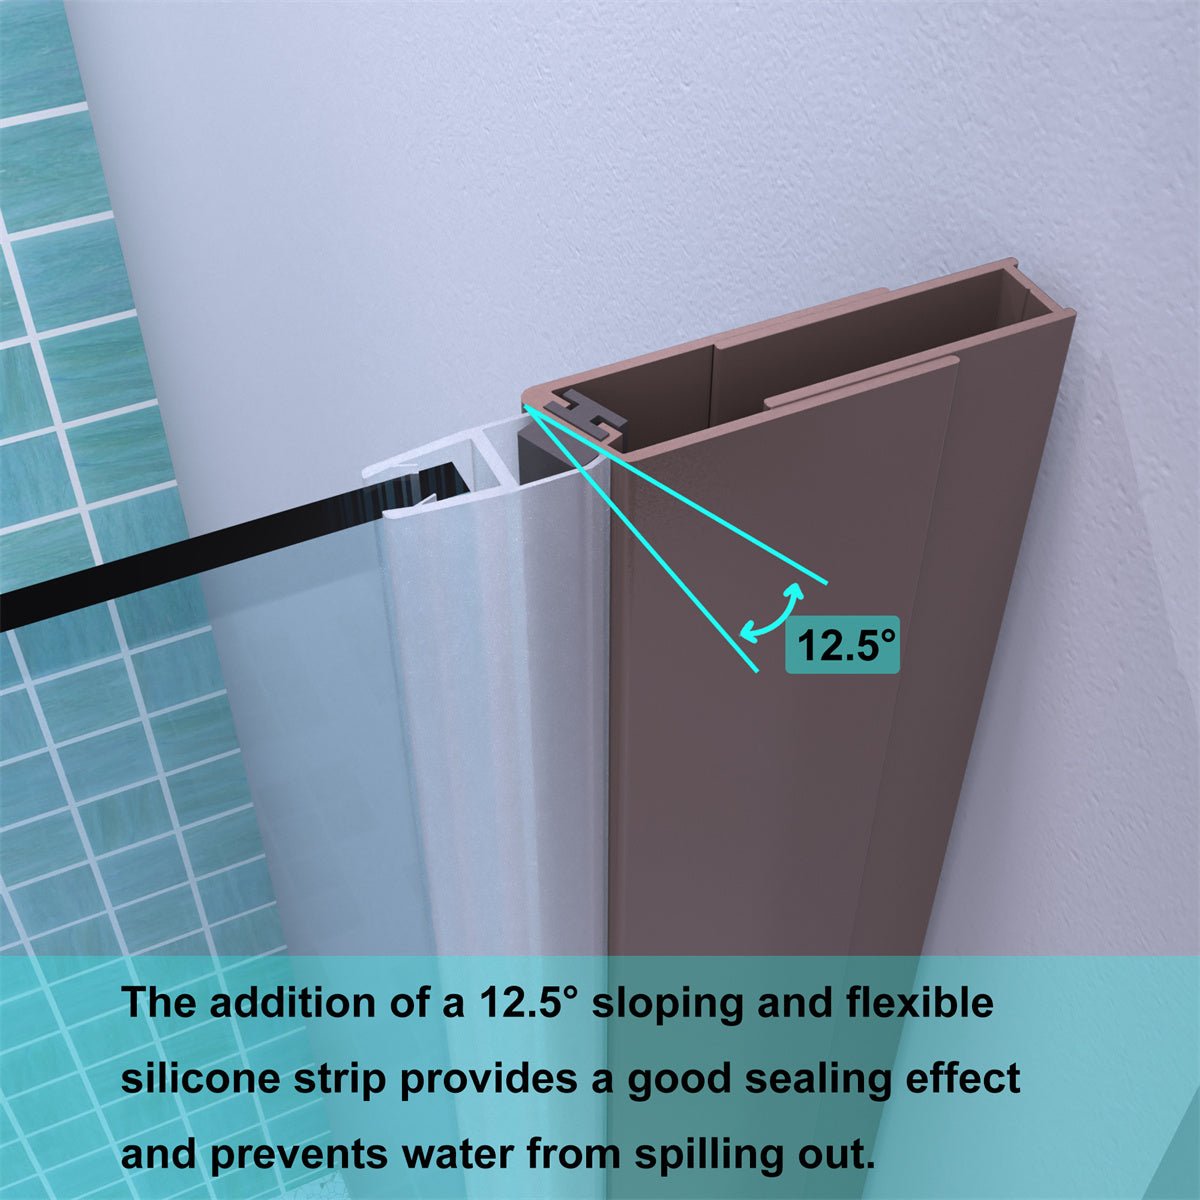 Adapt 32-33 1/2" W x 72" H Semi-Frameless Hinged Bi-Fold Shower Door in Oil Rubbed Bronze